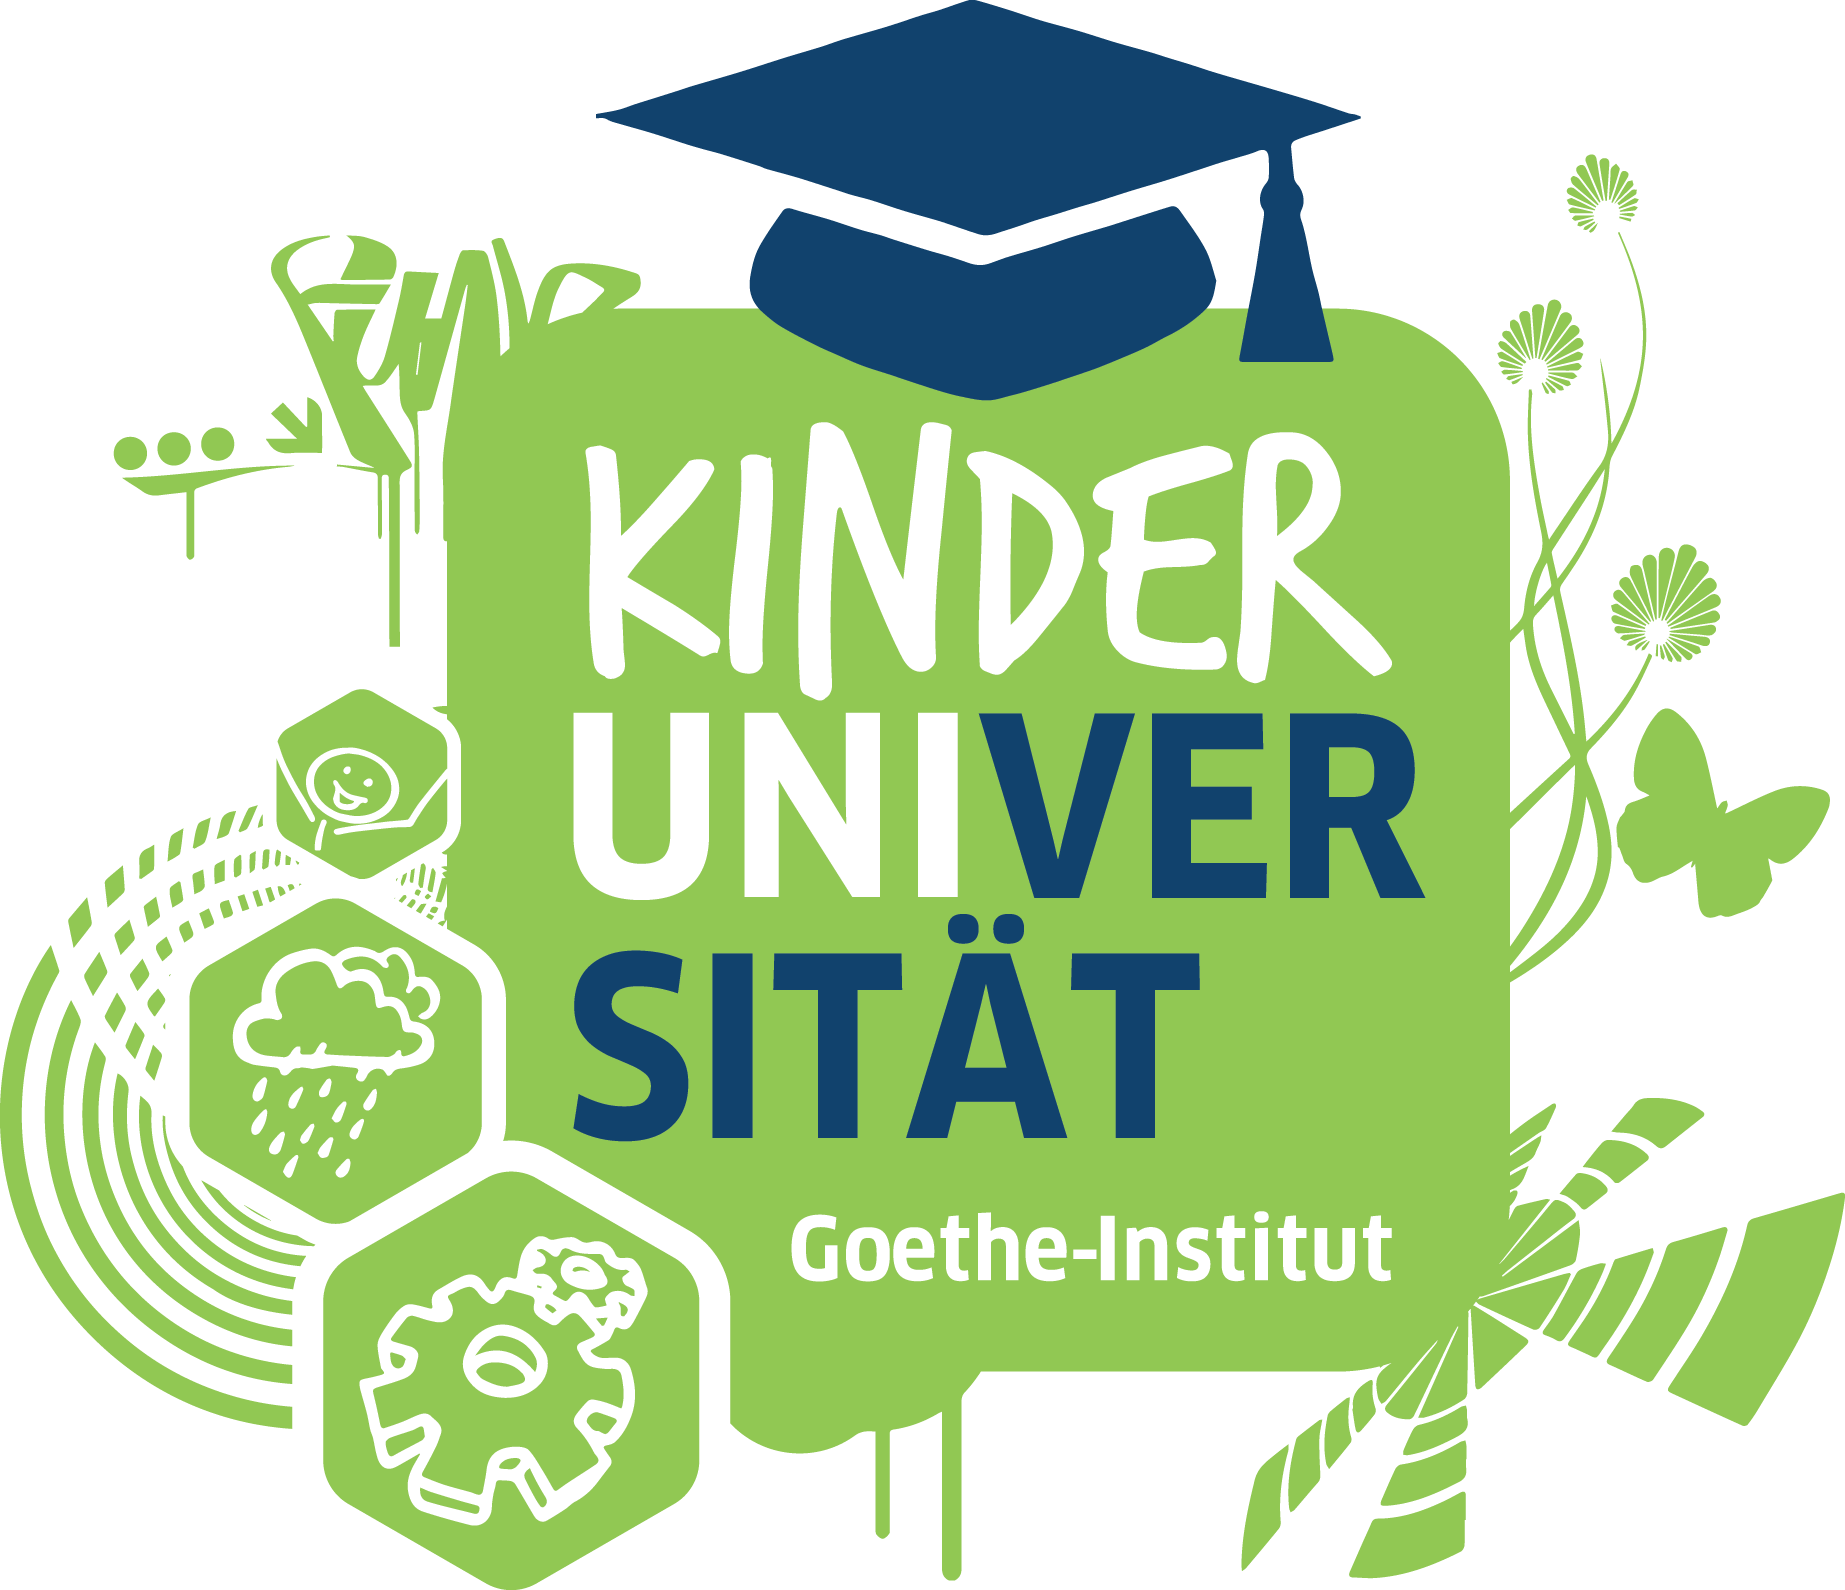 Featured image for “PC/Web: Deutsche digitale Kinderuniversität des Goethe-Instituts (Goethe-Insitut)”